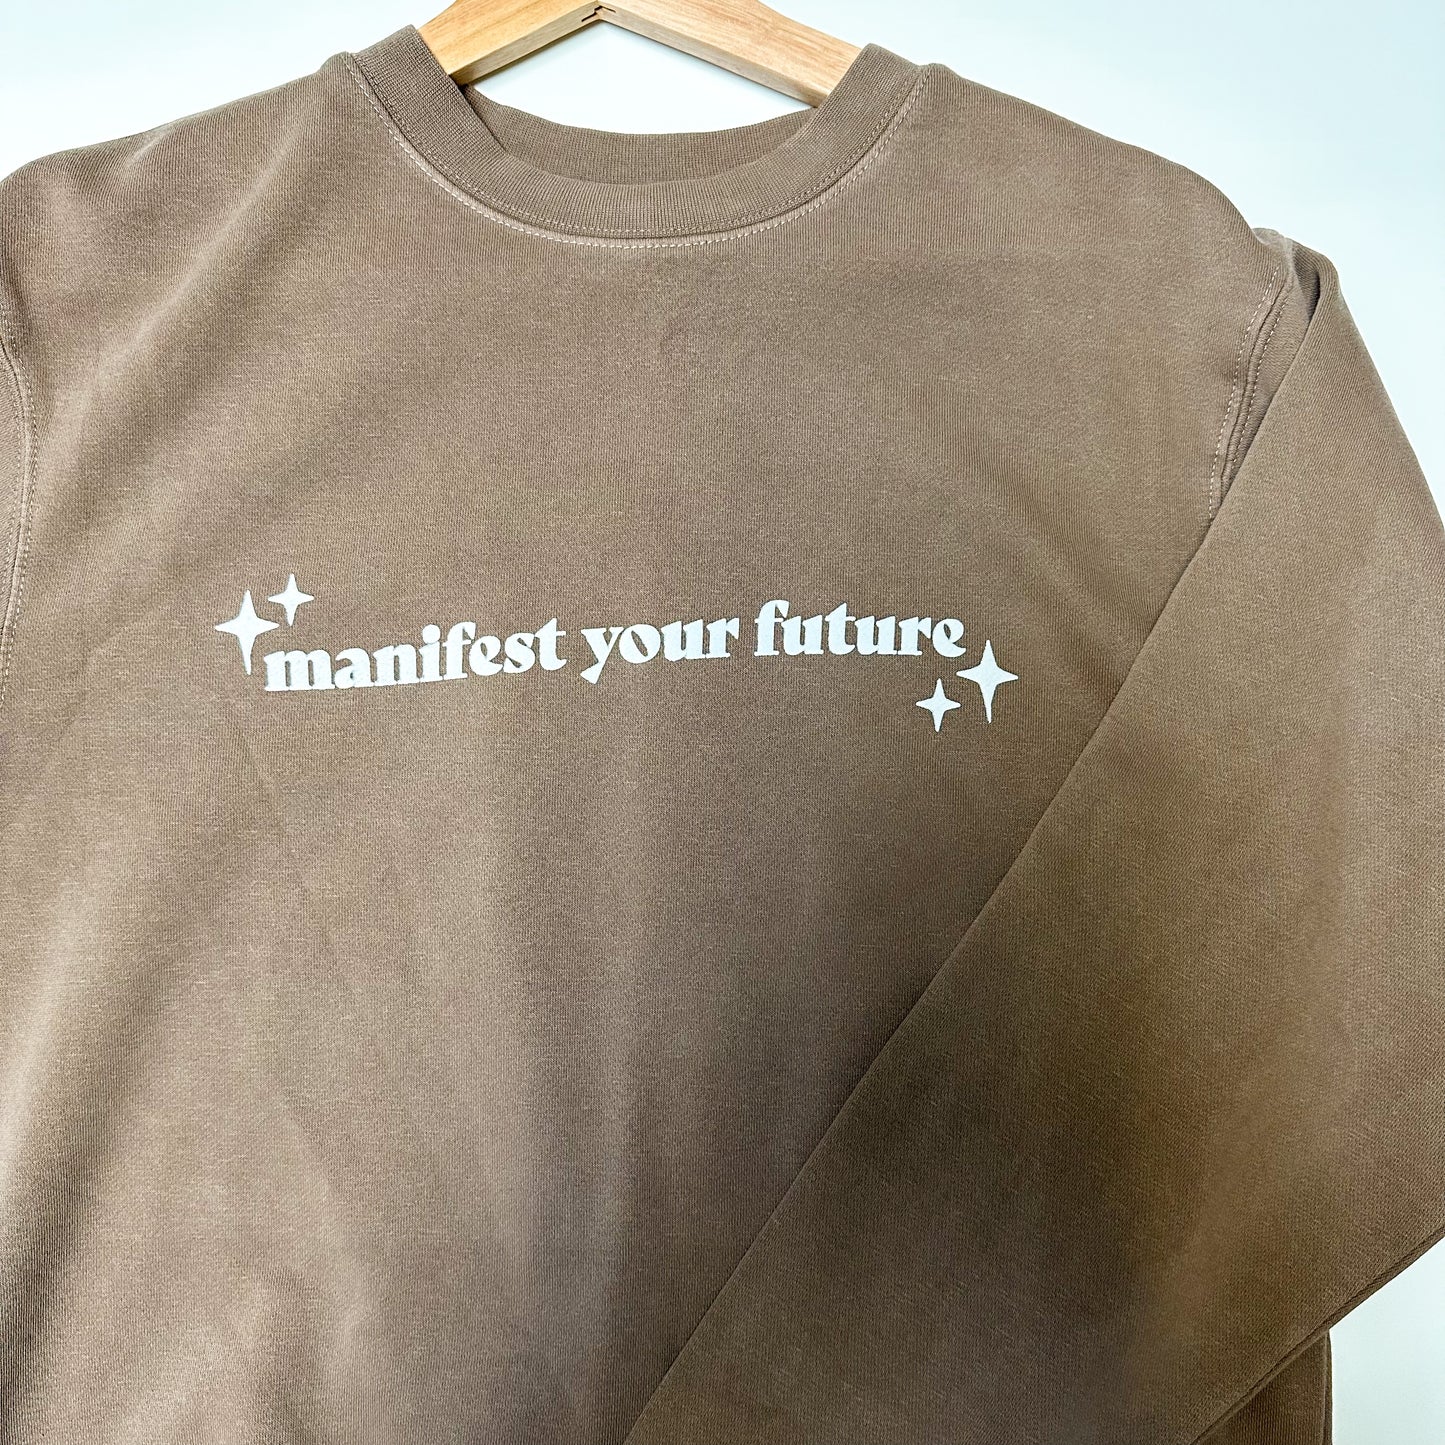 Manifest your future sweatshirt